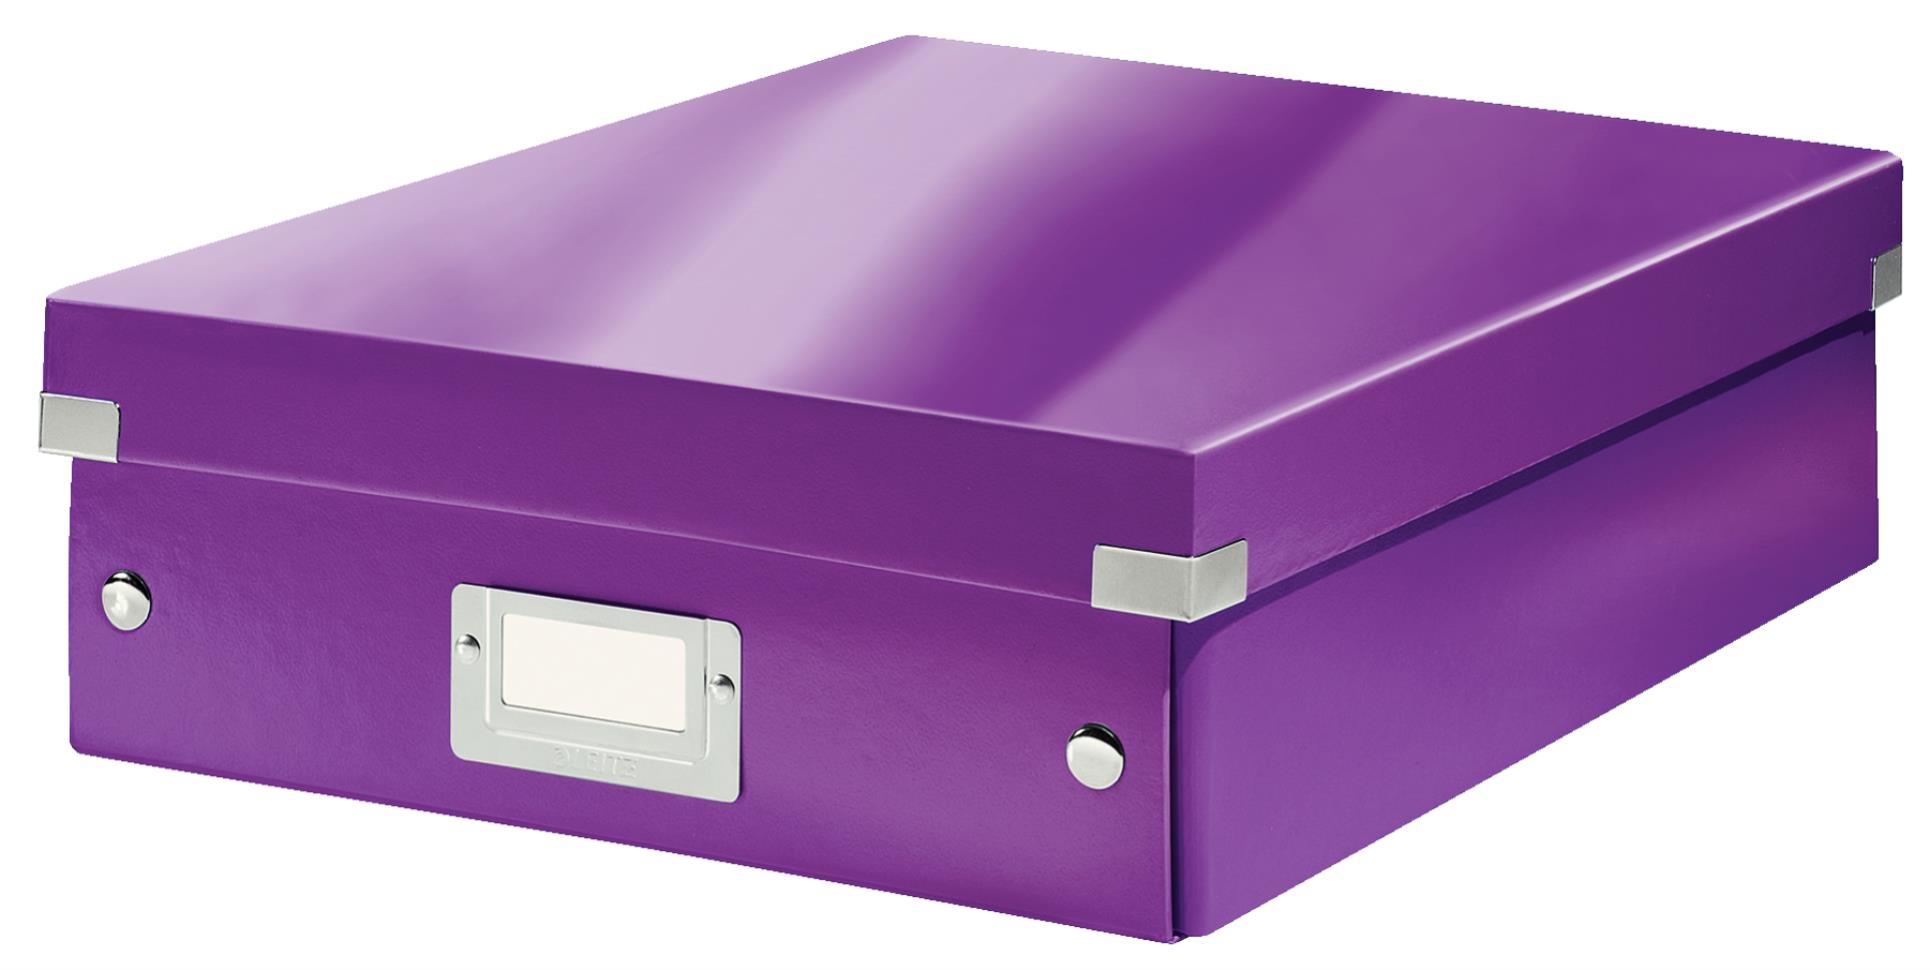 Box Click & Store Leitz WOW - M, purpurový